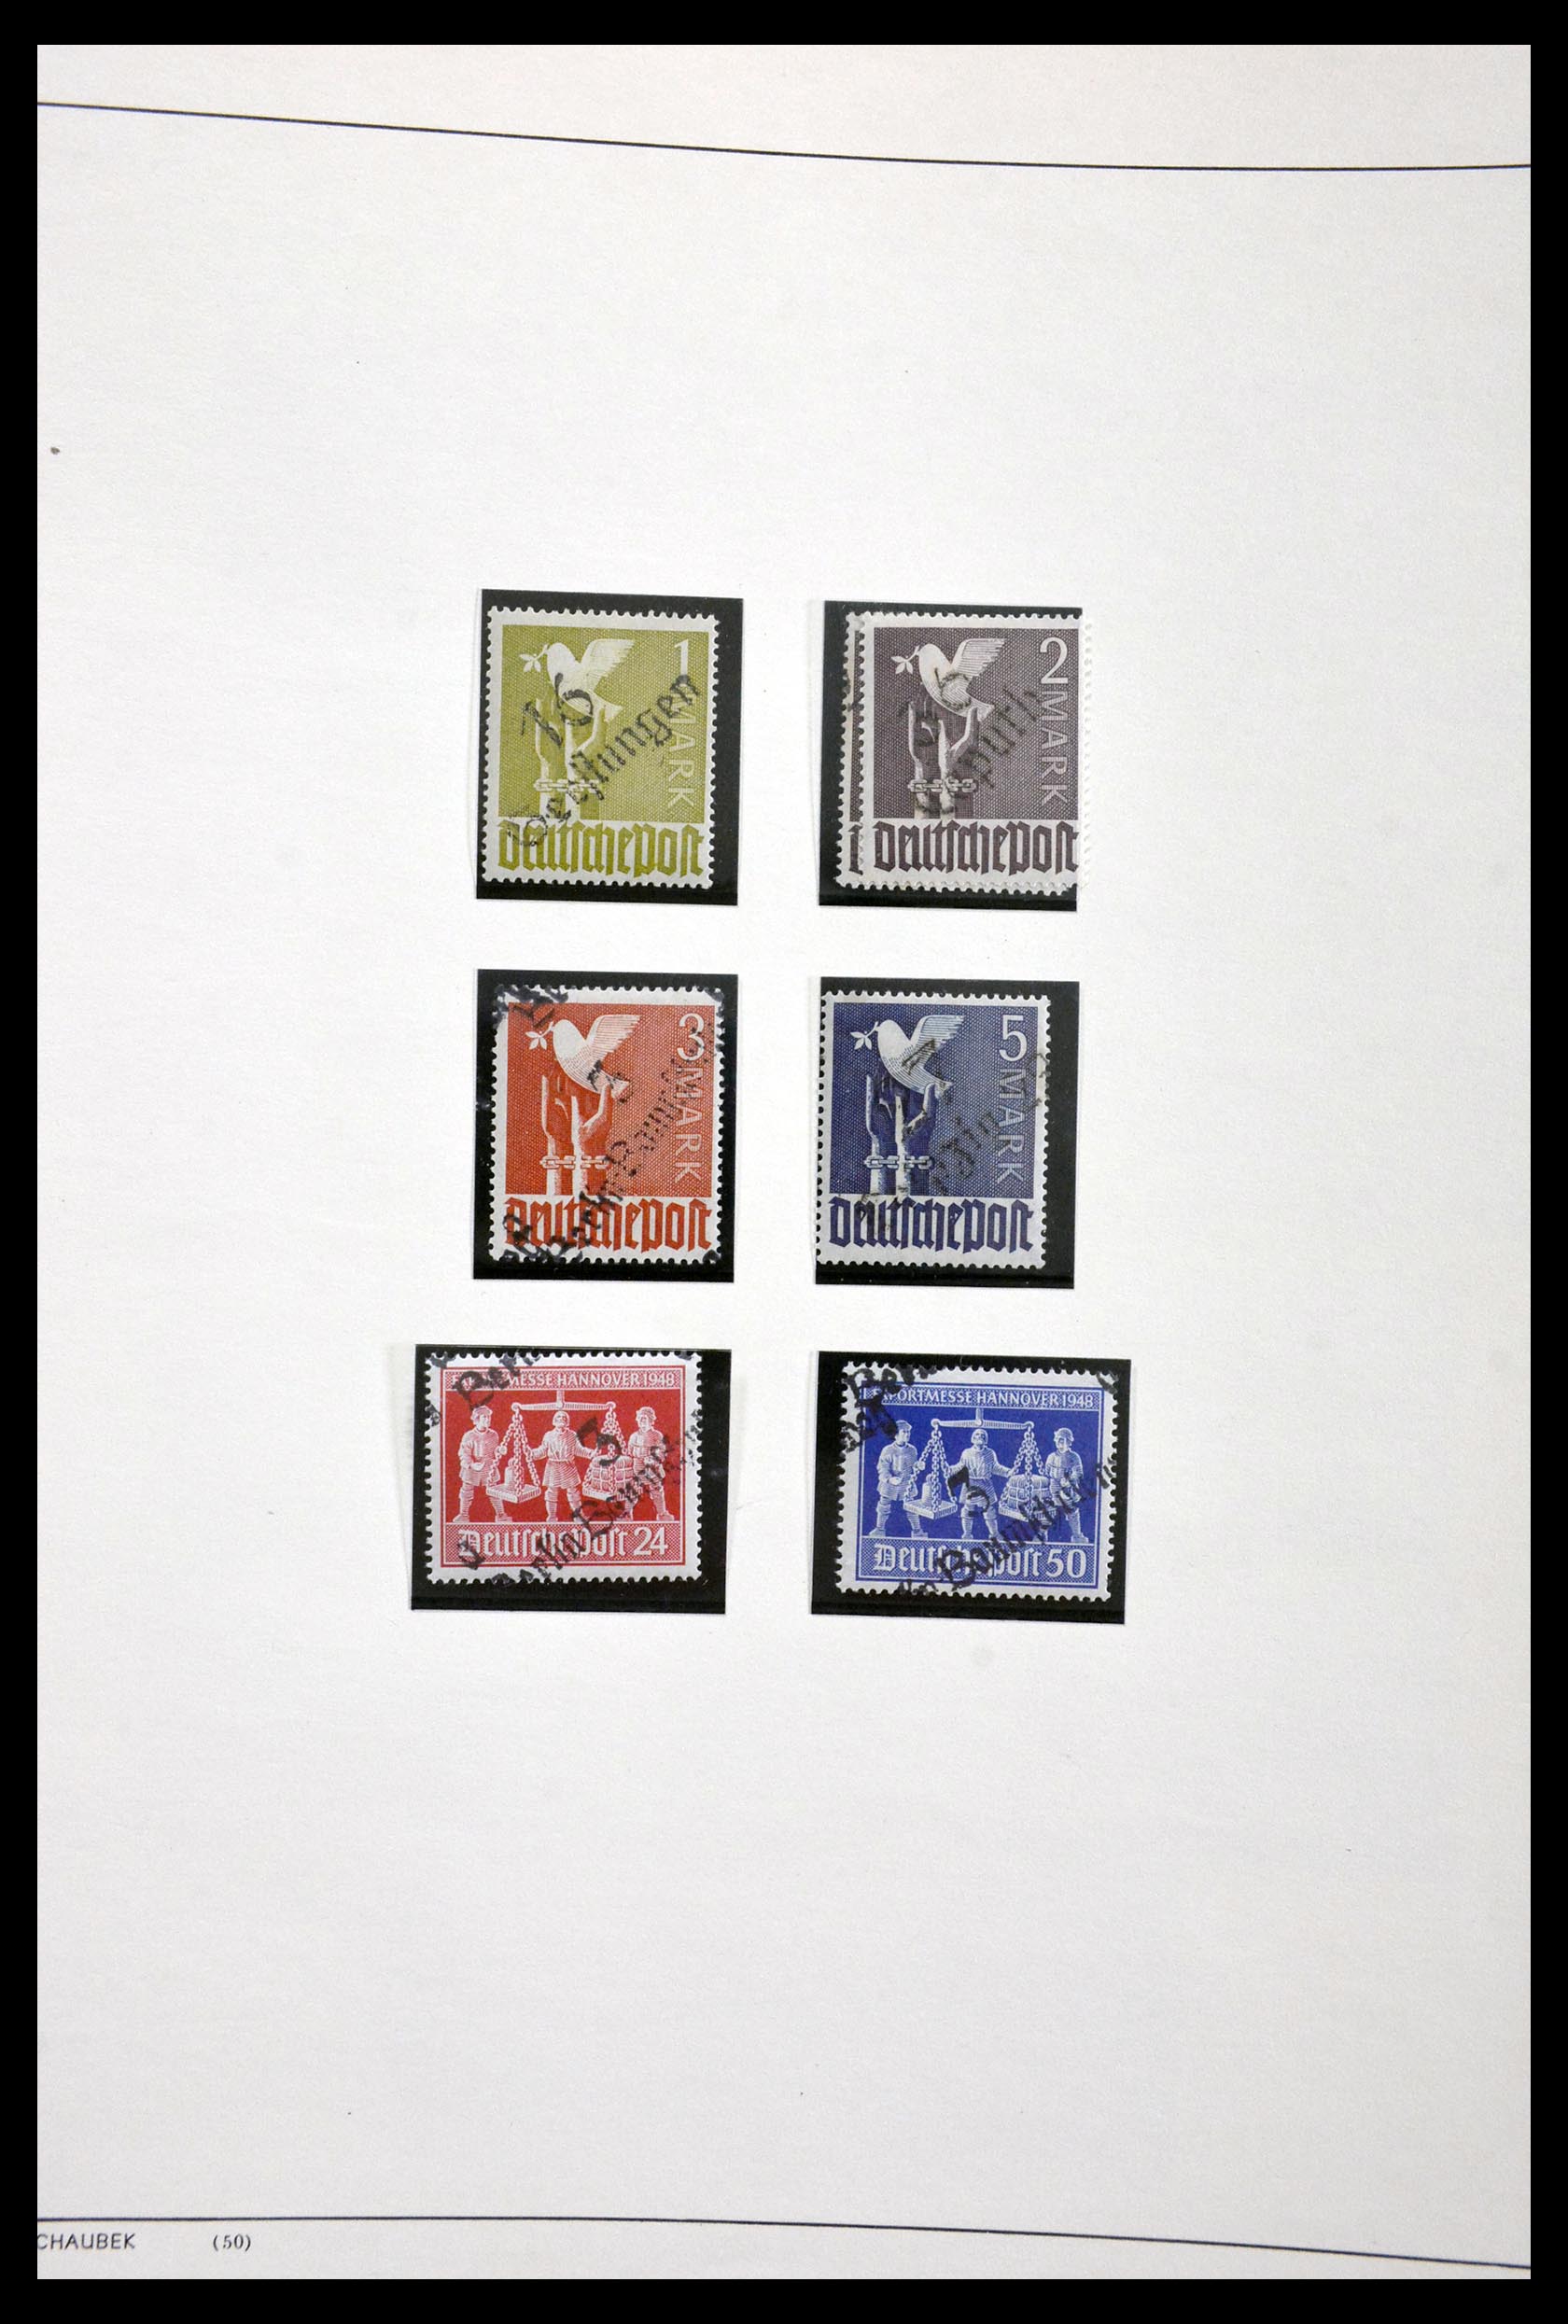 29731 062 - 29731 Local stamps Sovjetzone 1945-1949.